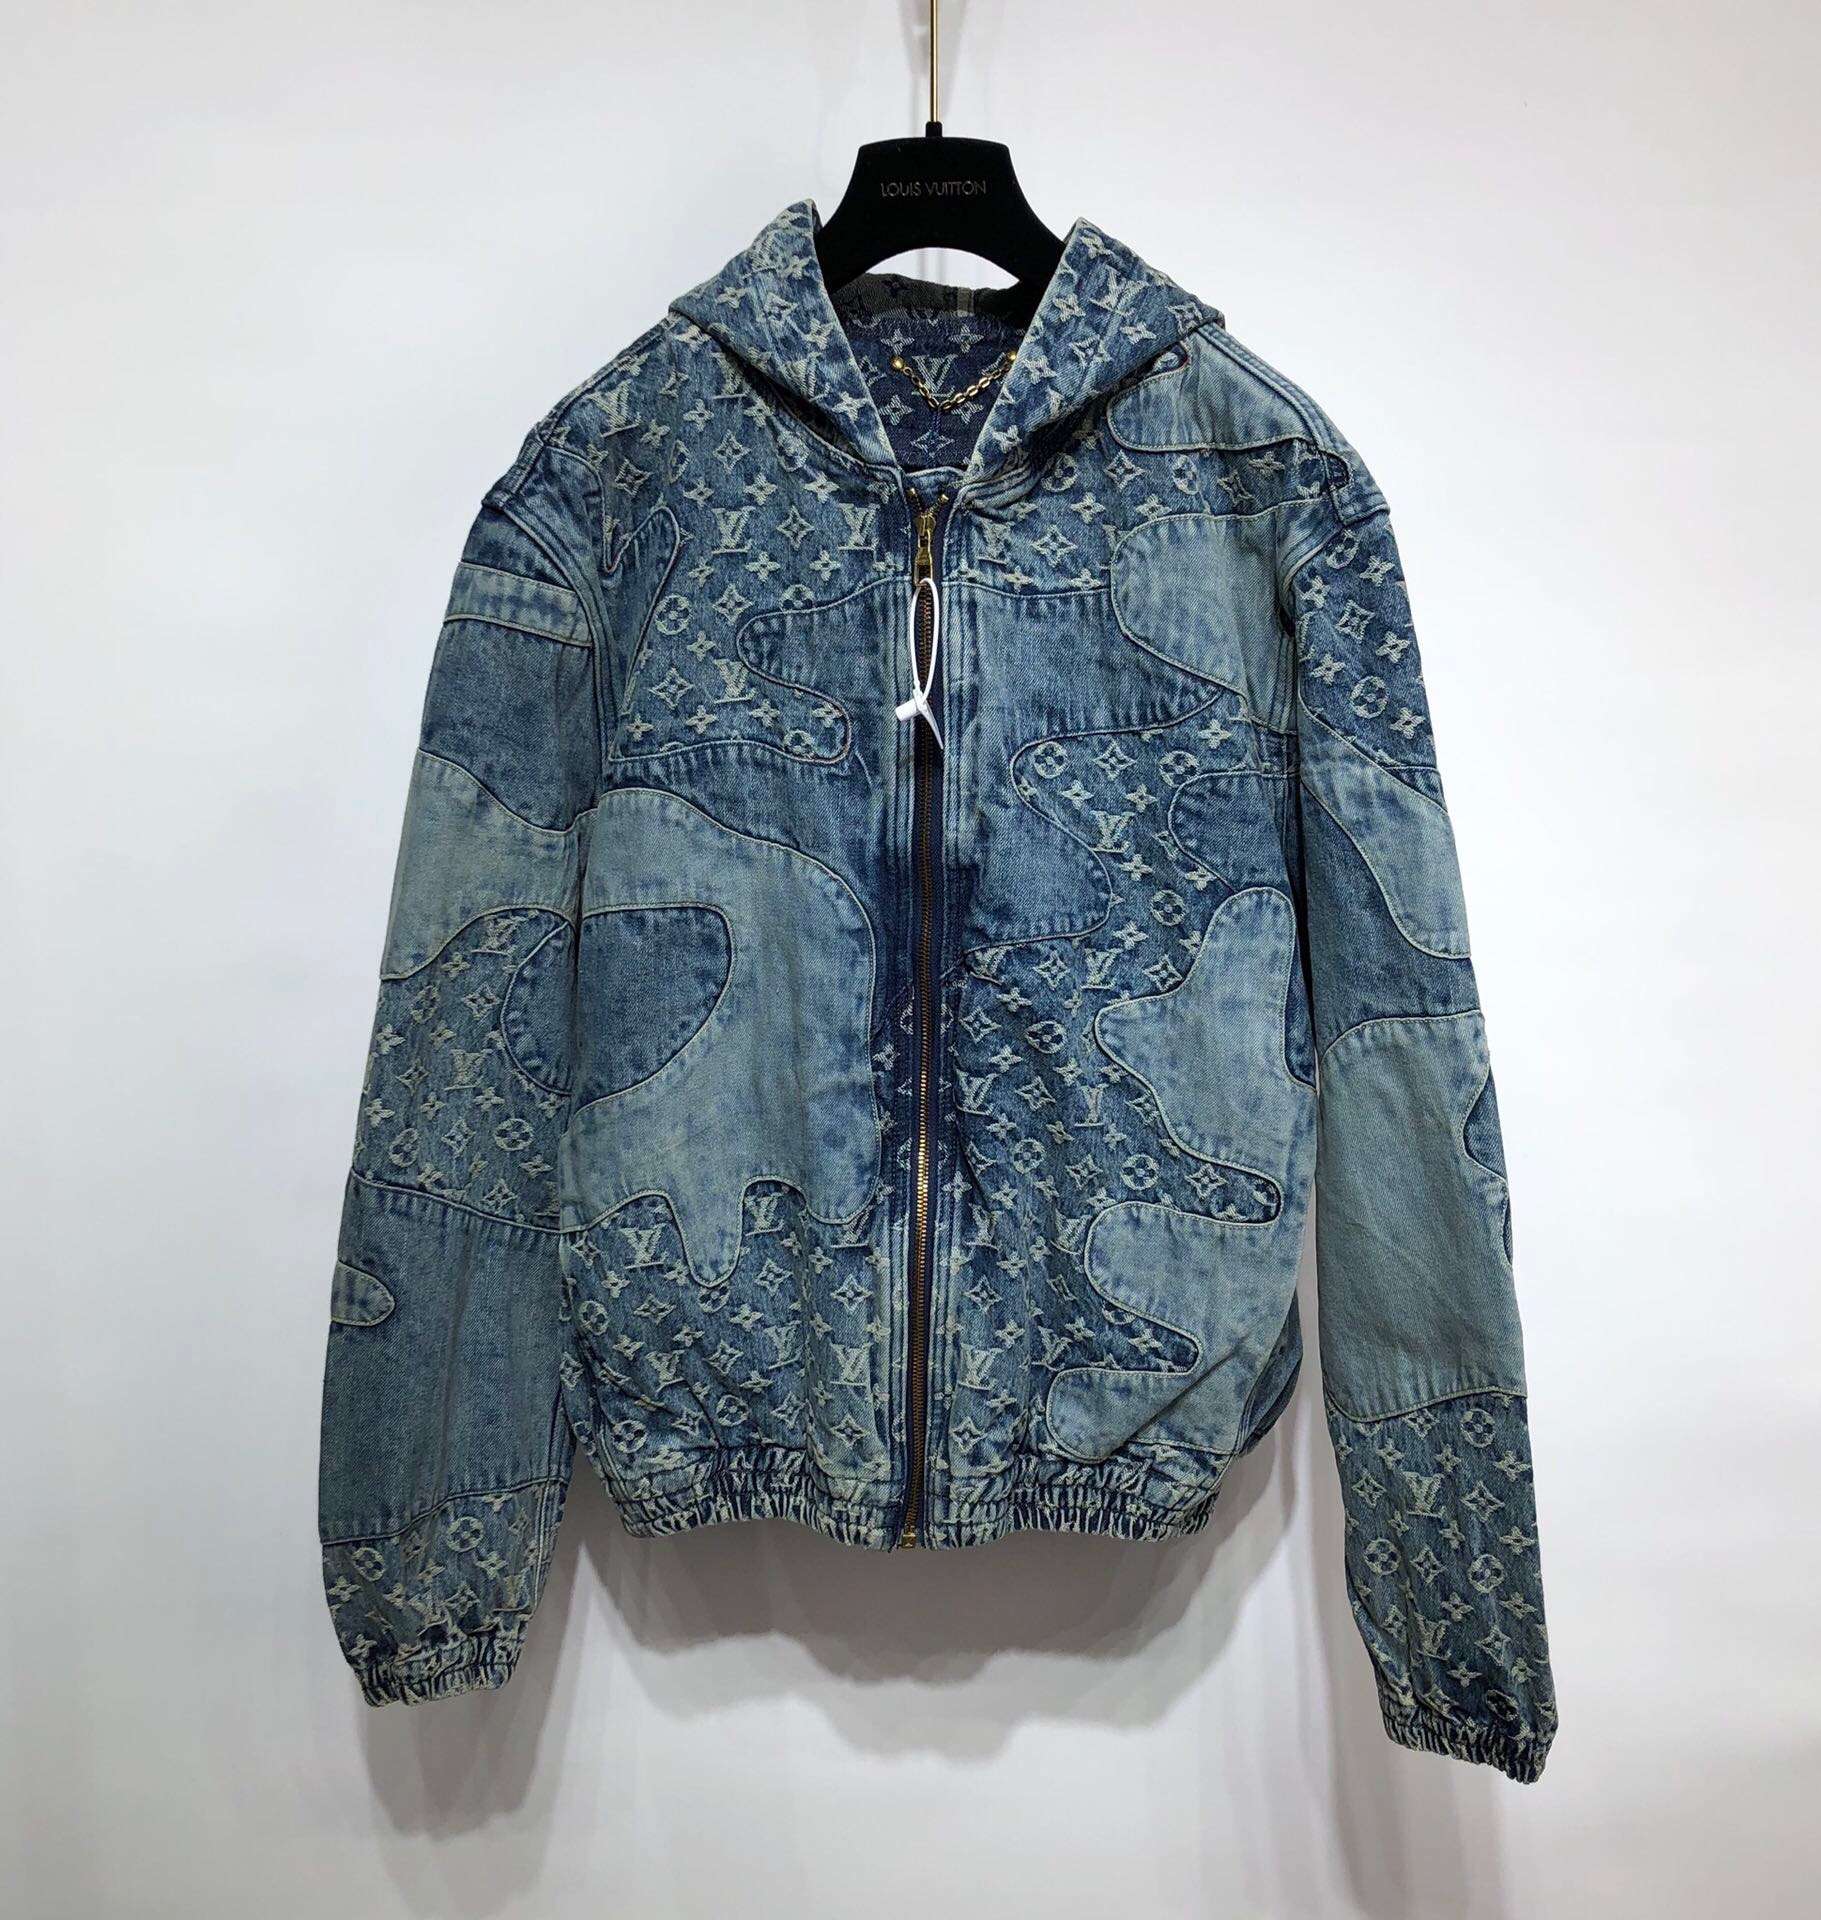 Louis Vuitton Grey Monogram 'Boyhood' Puffer Jacket - Shop The Latest SNKRS  APP Sought-After Release